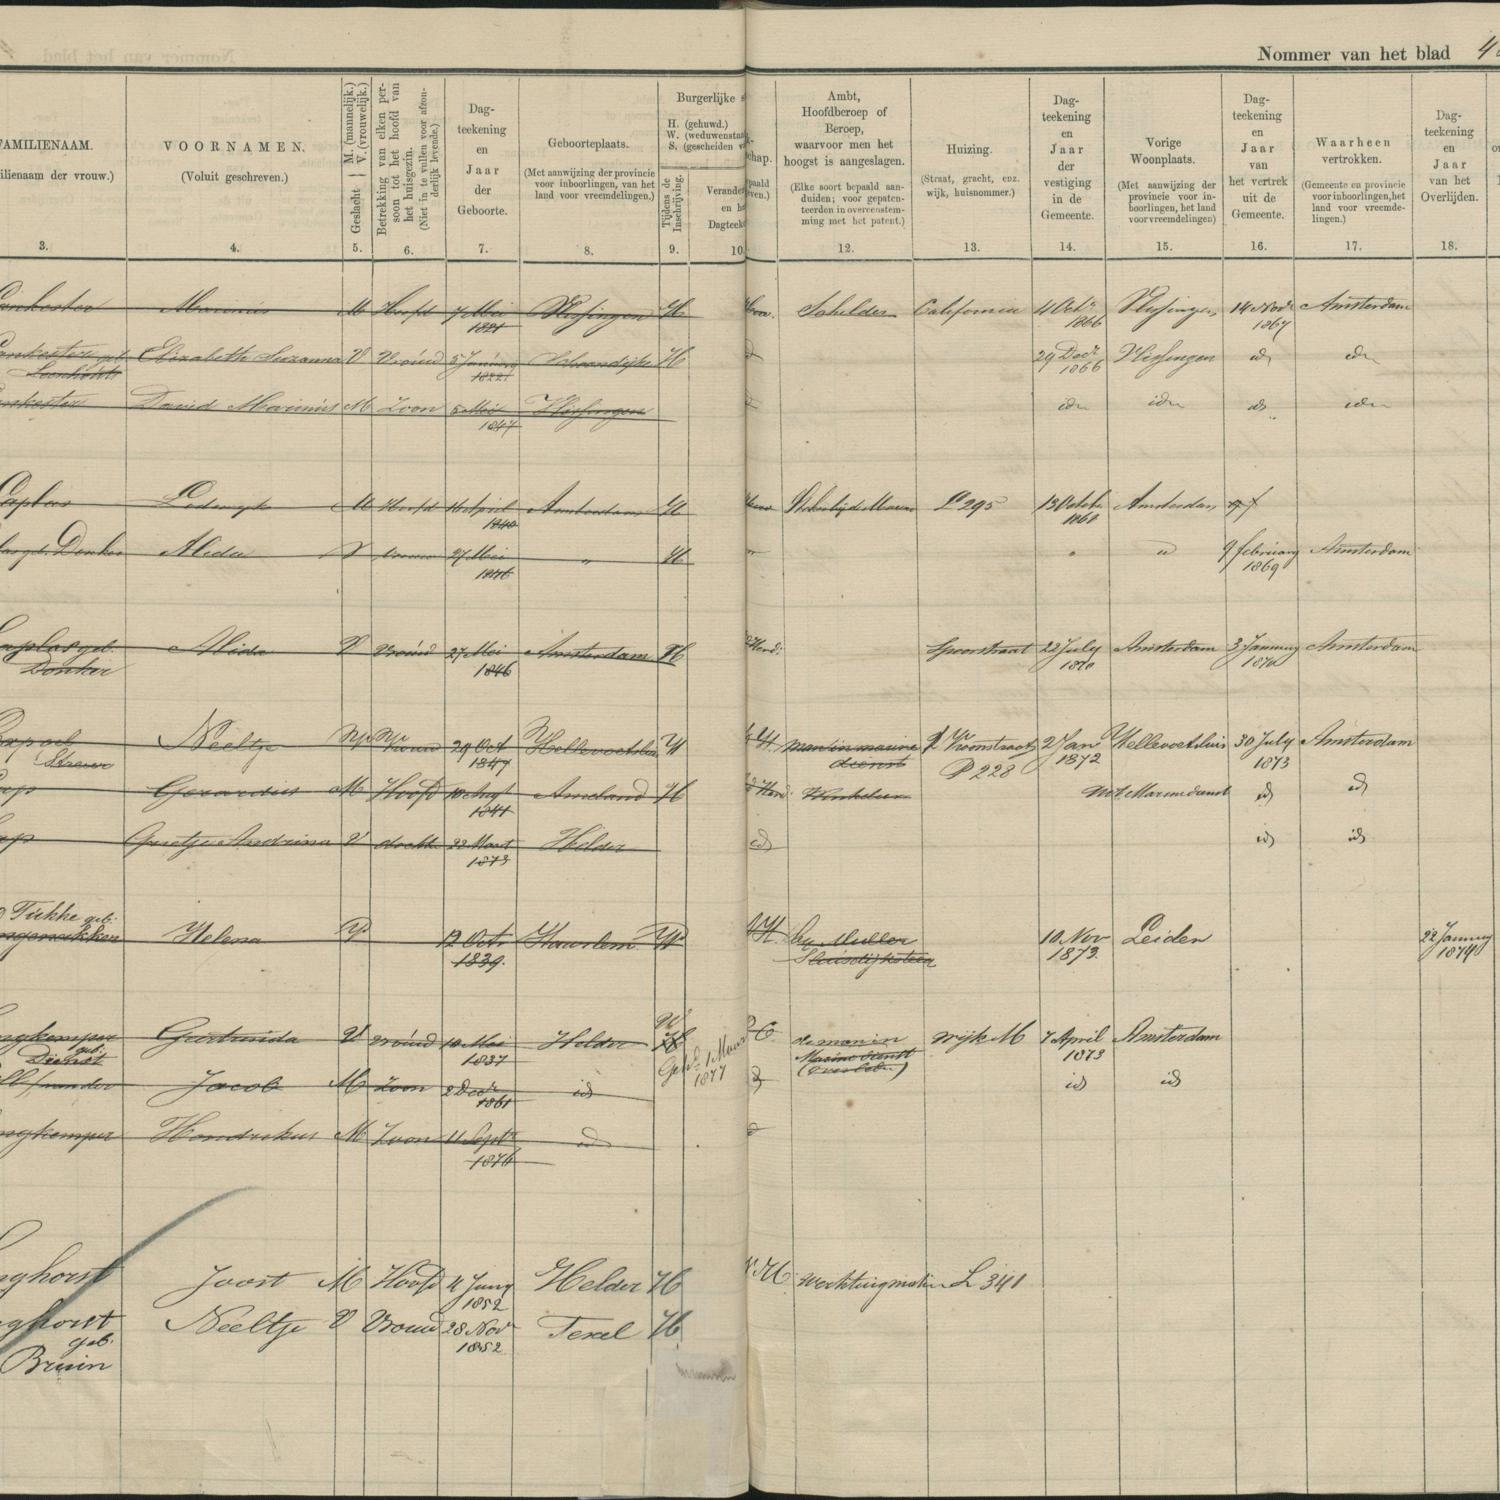 Civil registry, Den Helder, 1860-1880, letter "L", sheet 45